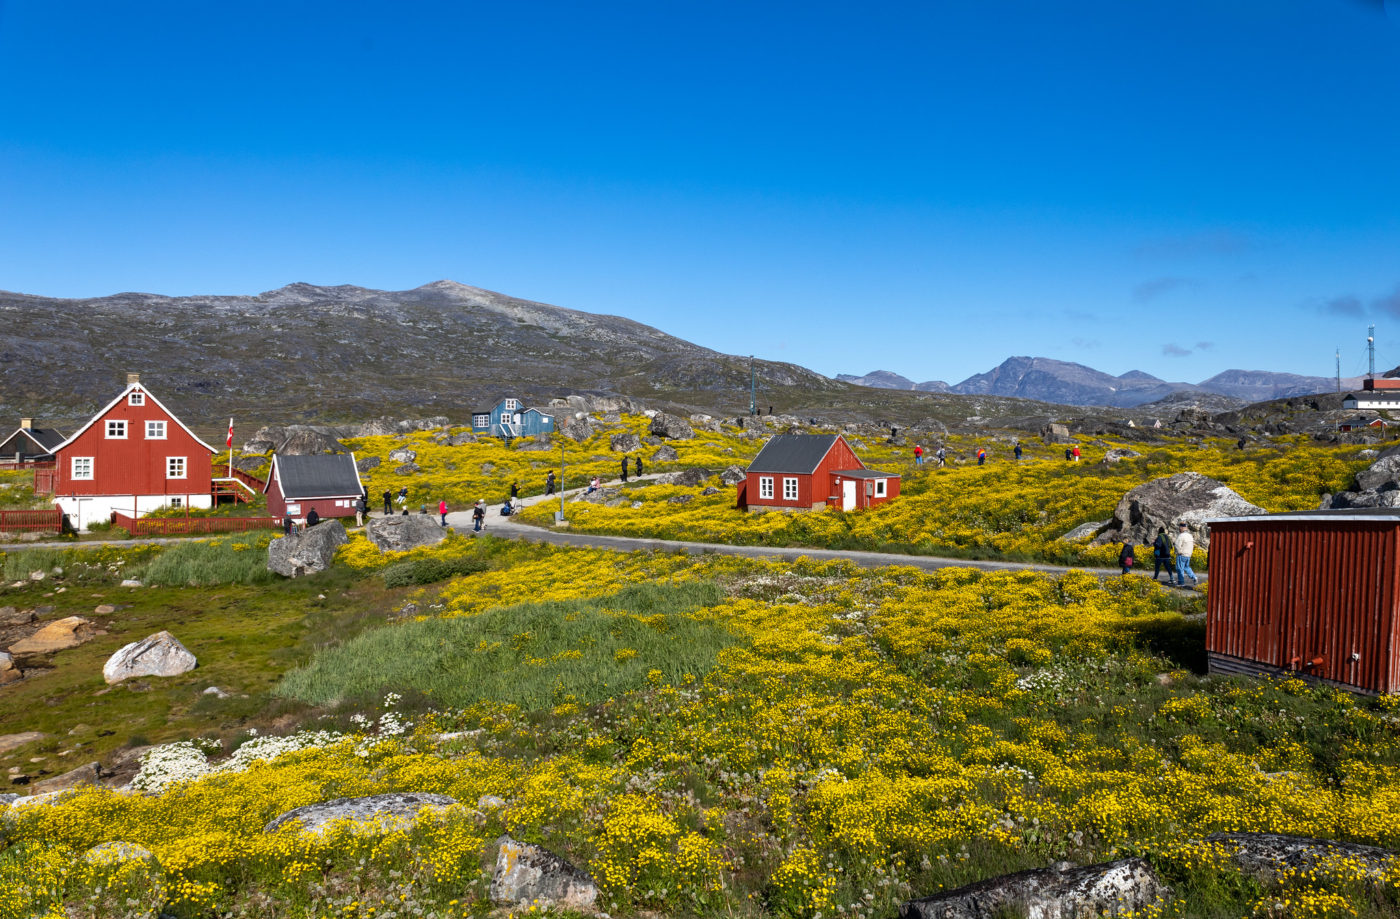 Charming Nanortalik, Greenland Summer Walking Tour – Wildflowers, Icebergs & Music